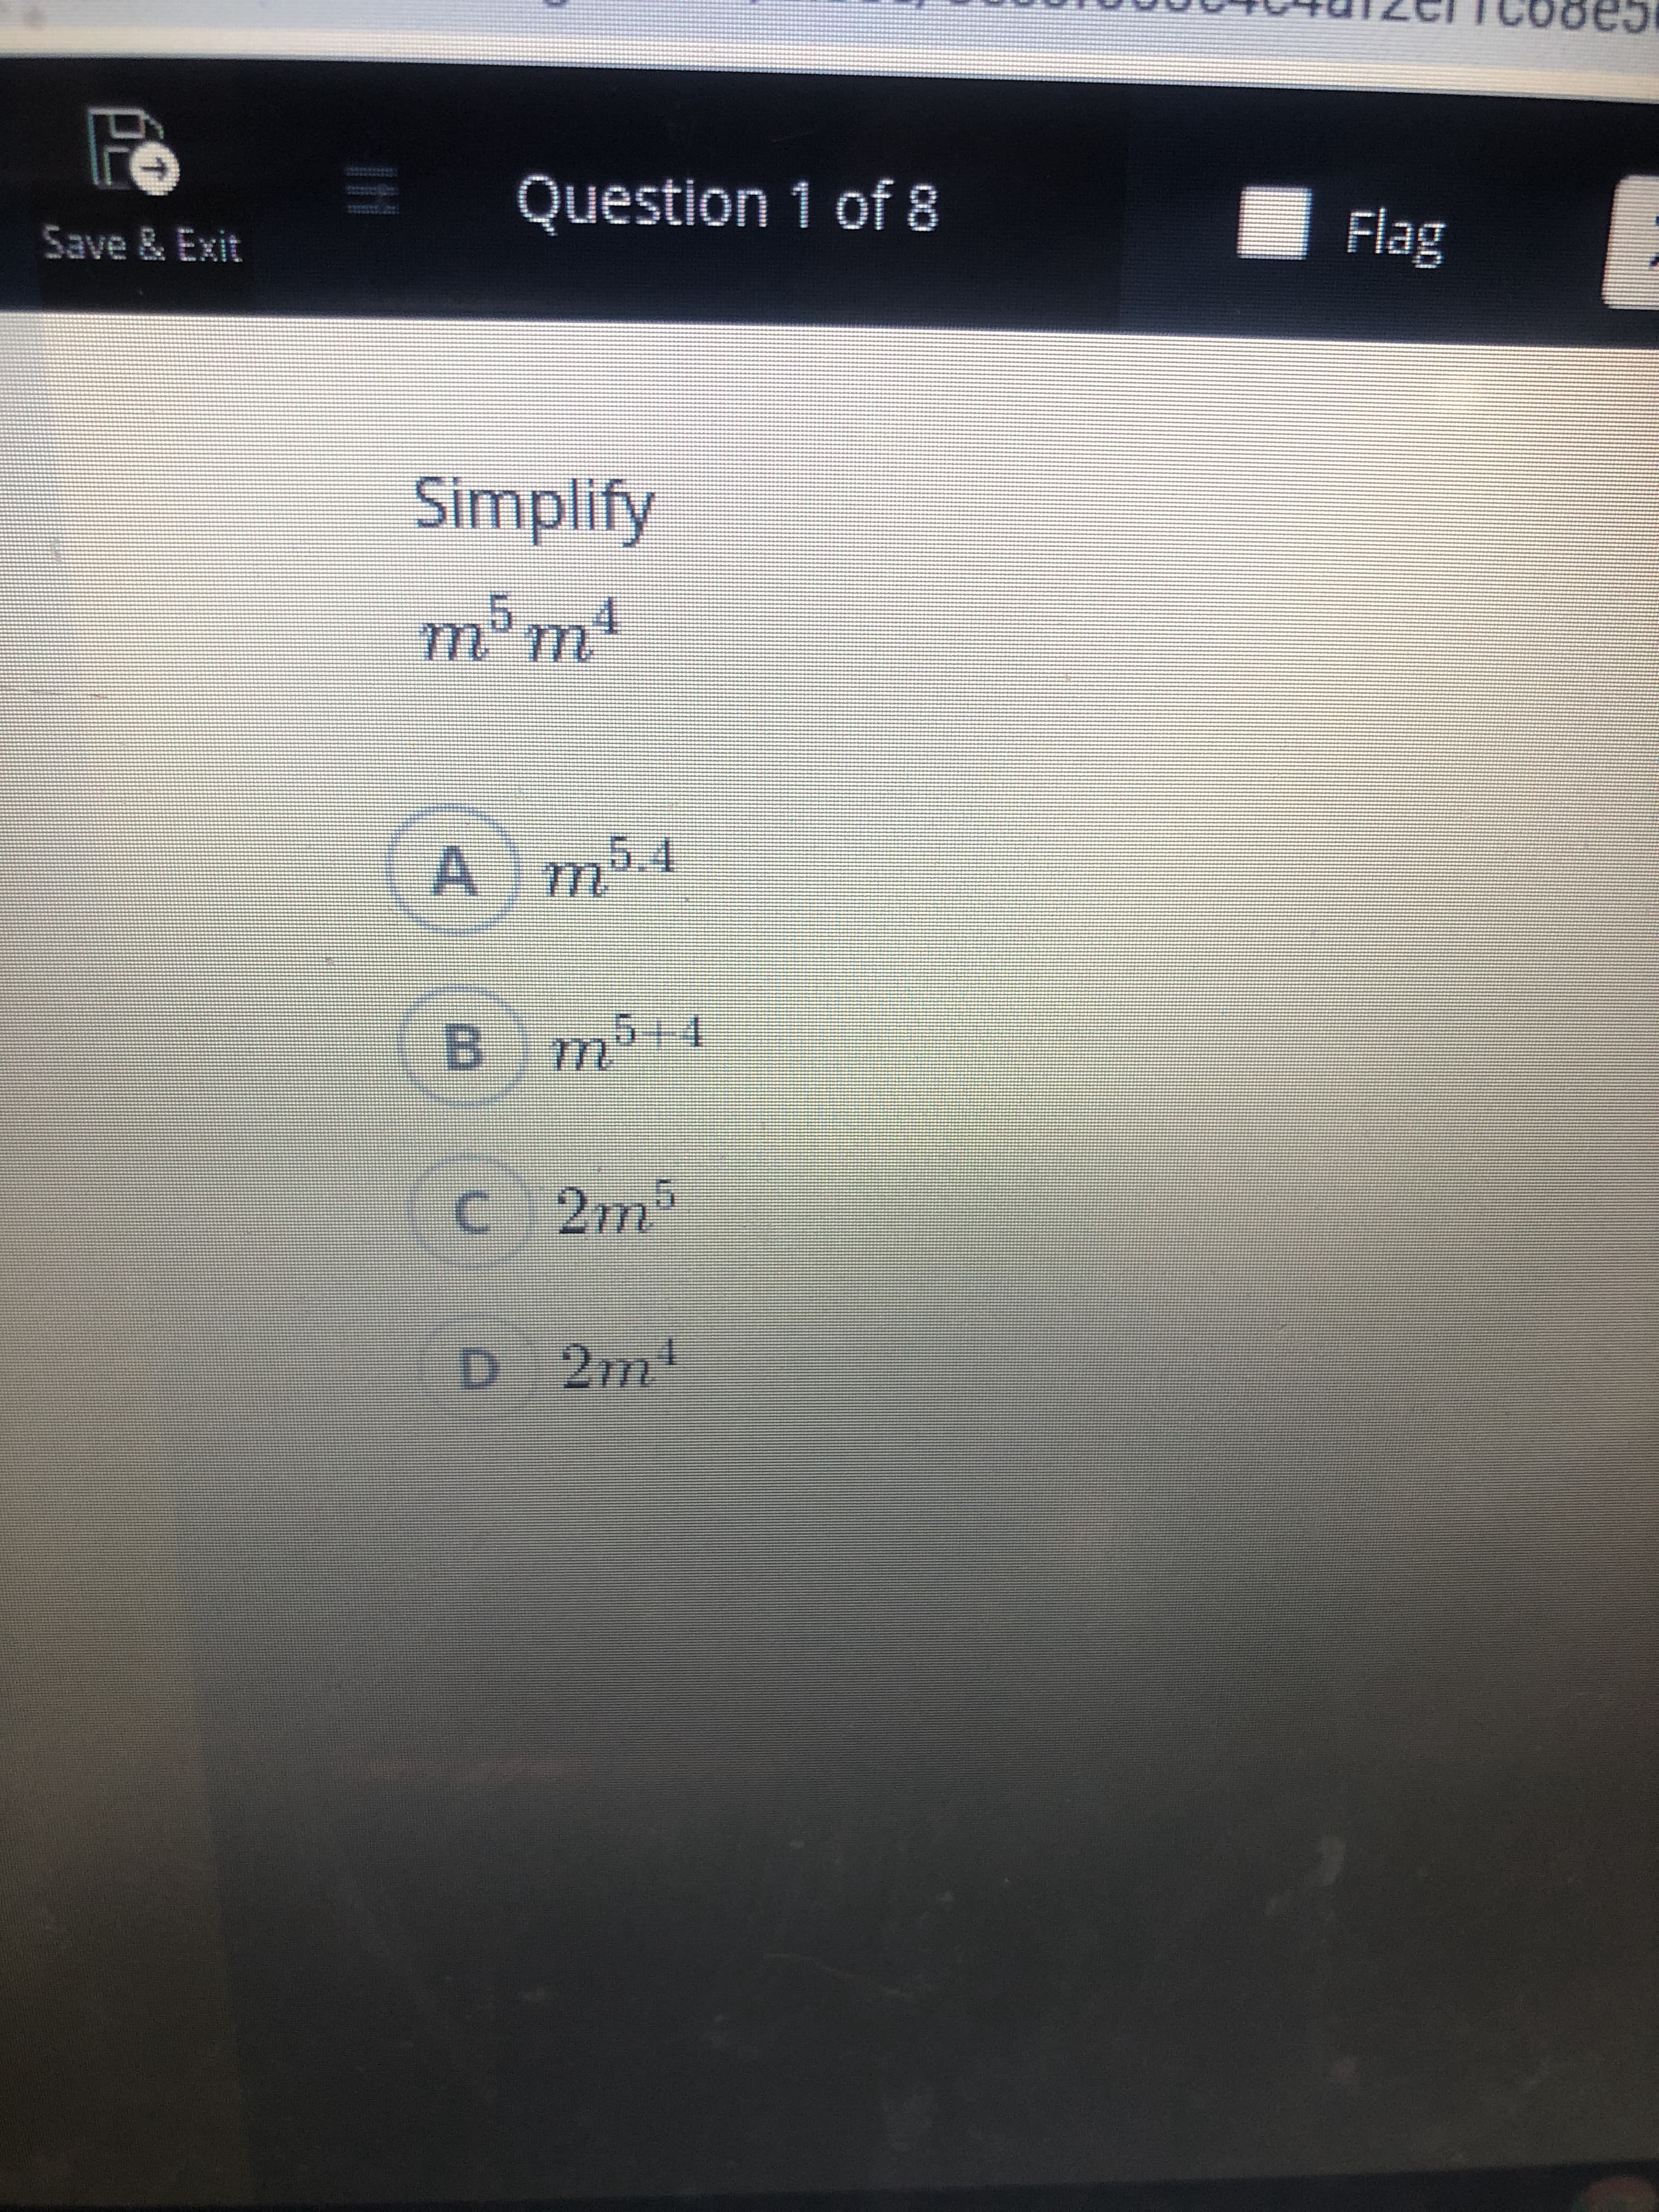 Simplify
m²m²
5
